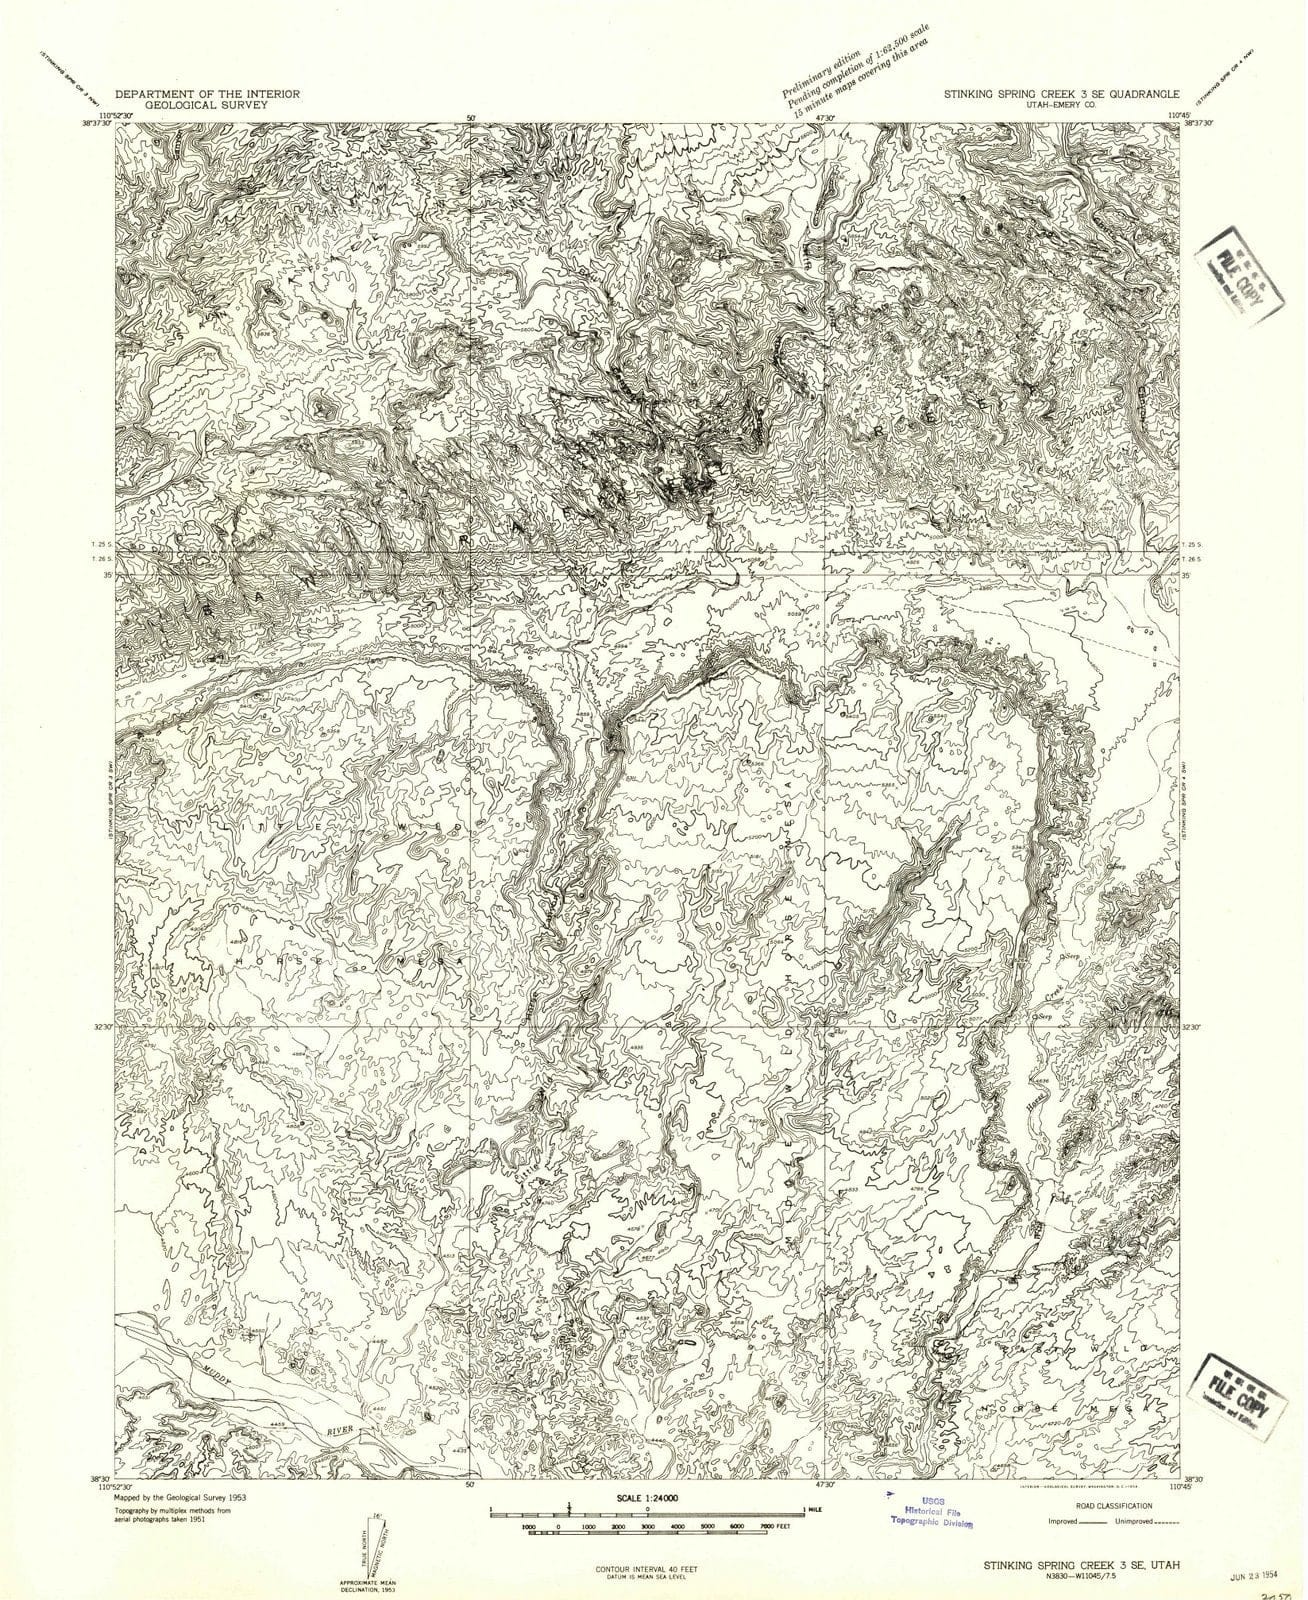 1954 Stinking Spring Creek 3, UT - Utah - USGS Topographic Map v3